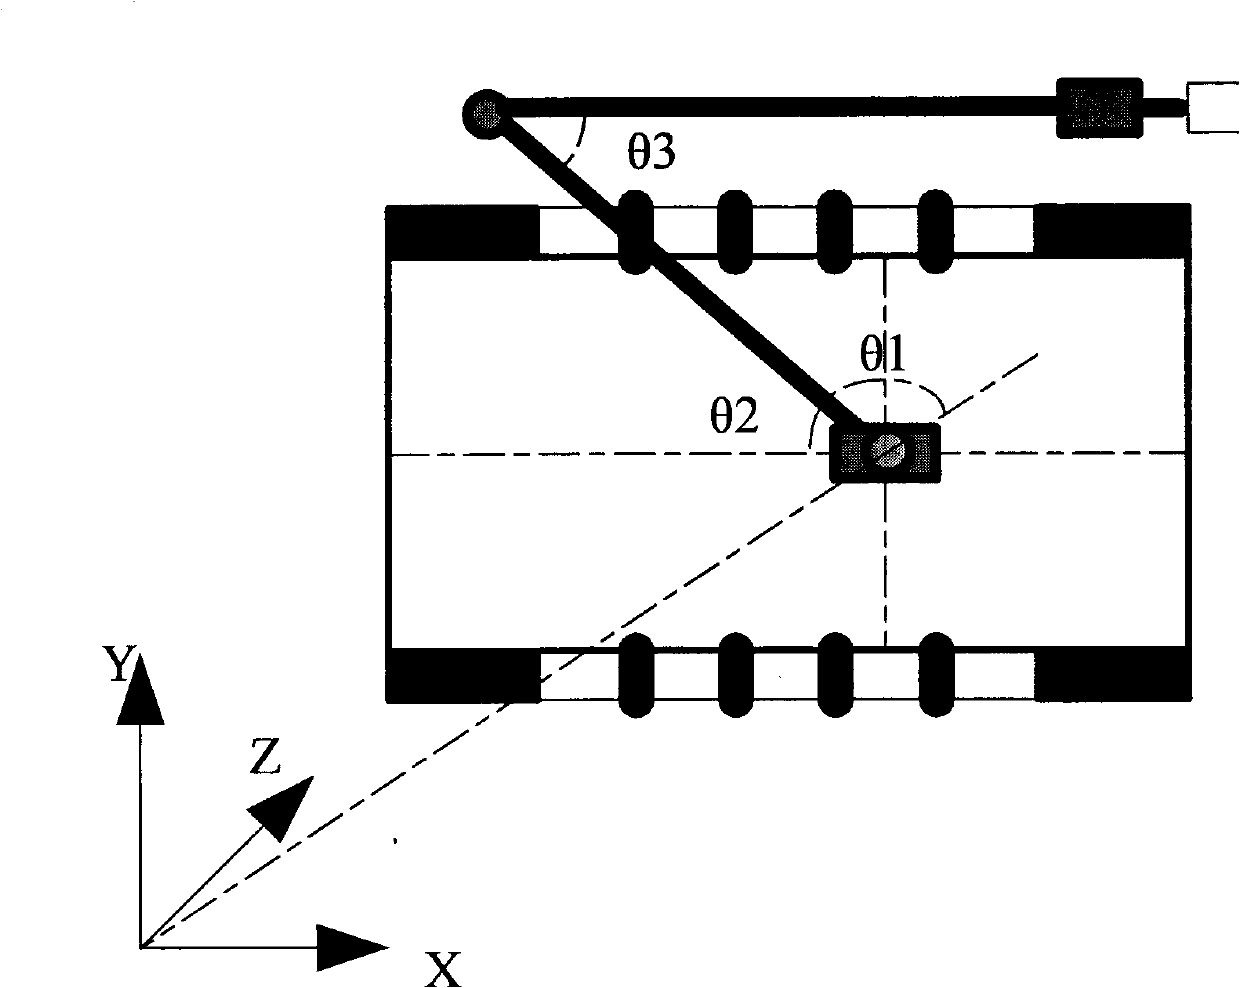 Unified dynamic modeling method of generalized system of crawler-type mobile manipulator